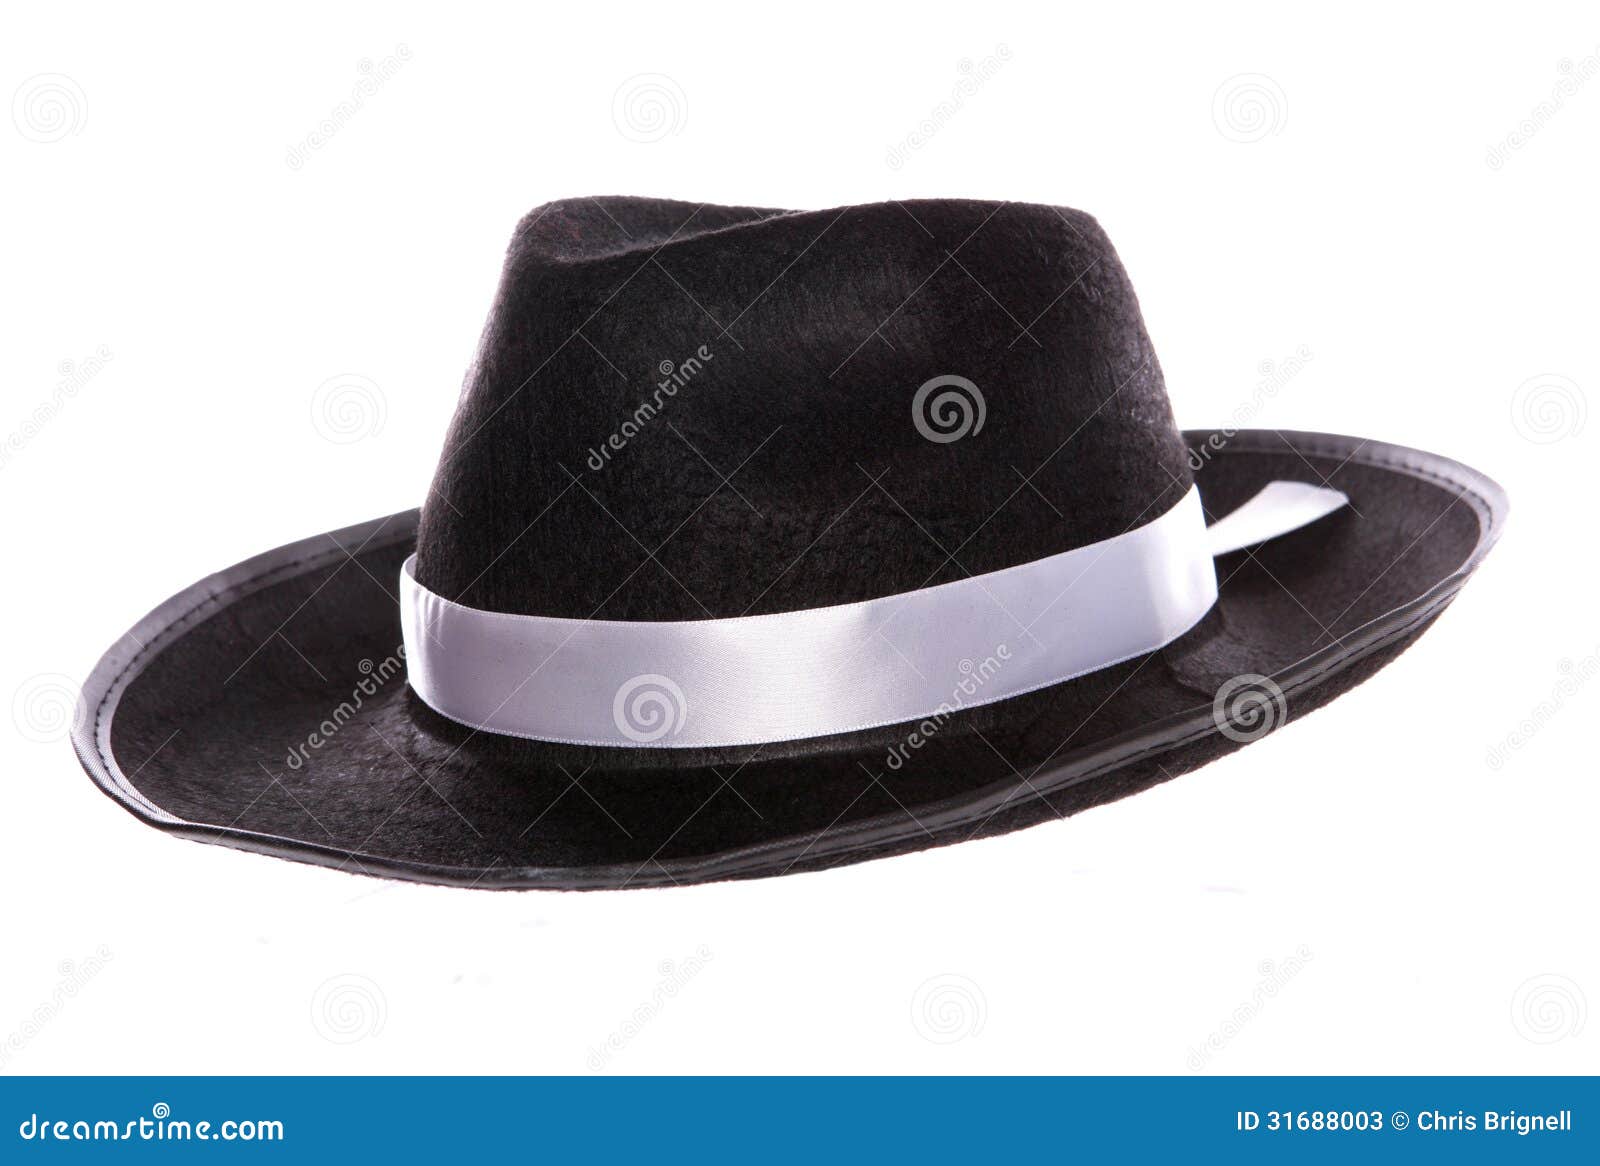 Sombrero negro de mafia imagen de archivo. Imagen de recorte - 31688003